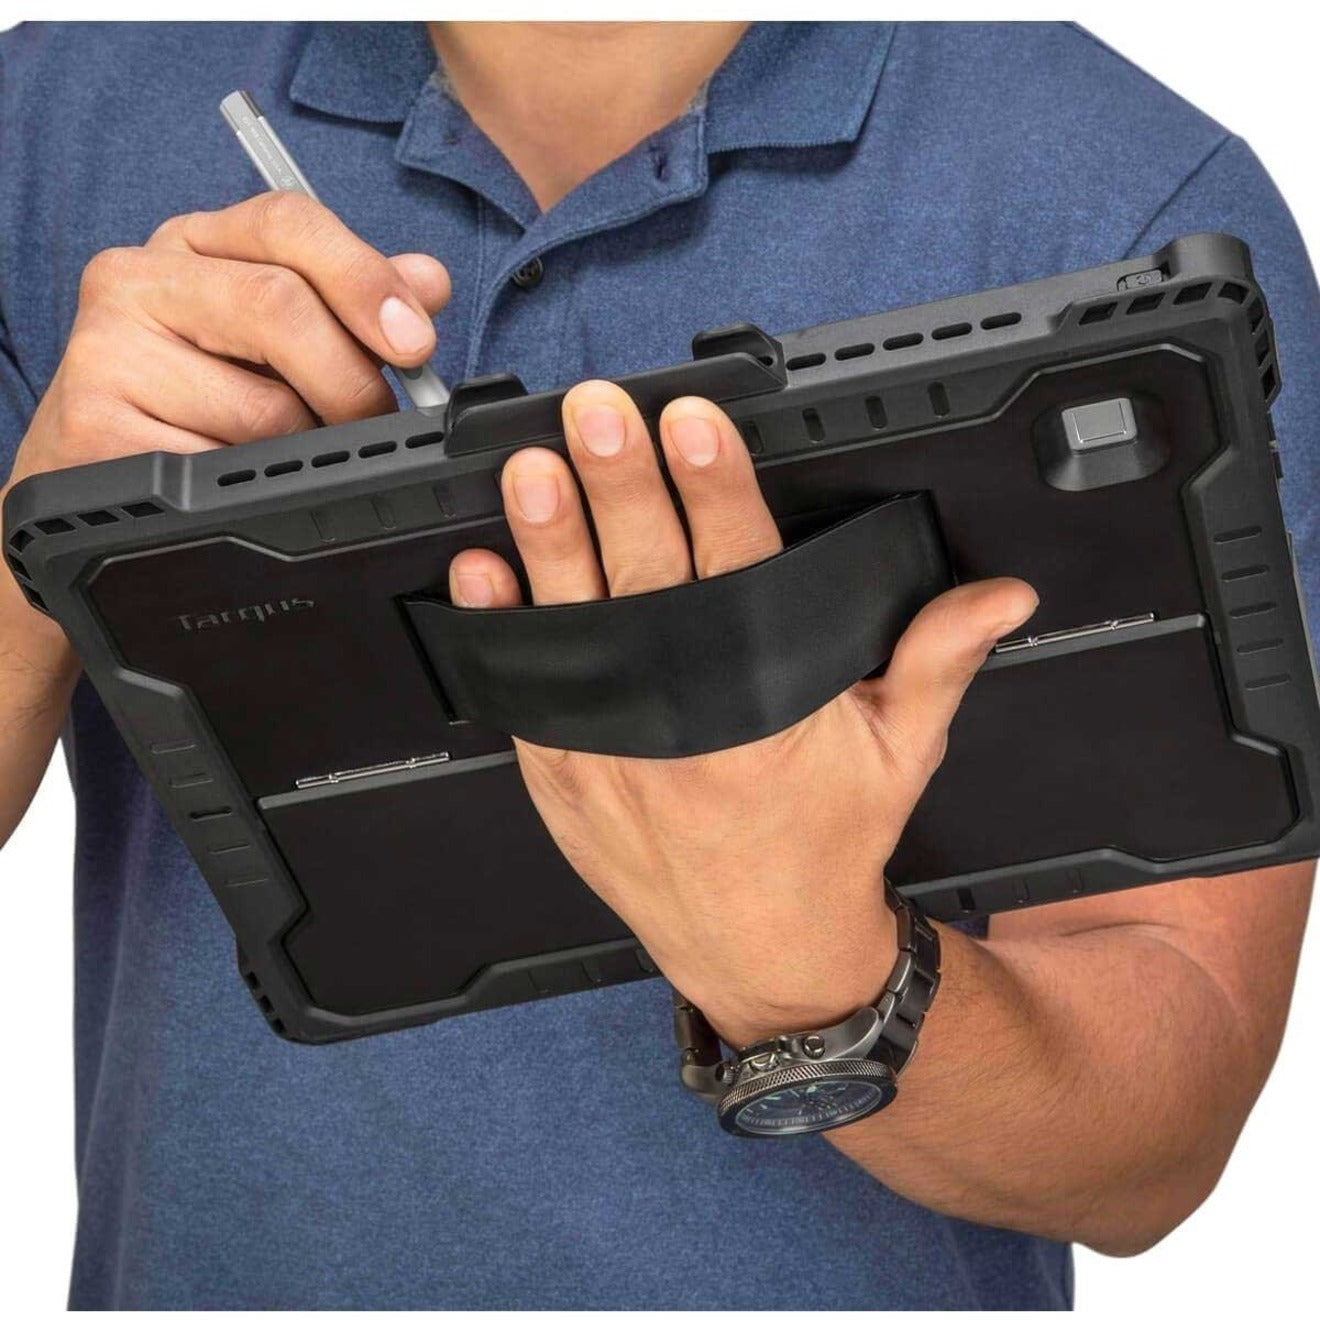 Targus THZ811GLZ Commercial Grade Tablet Case For HP Elite x2 G4, Rugged Carrying Case - Black